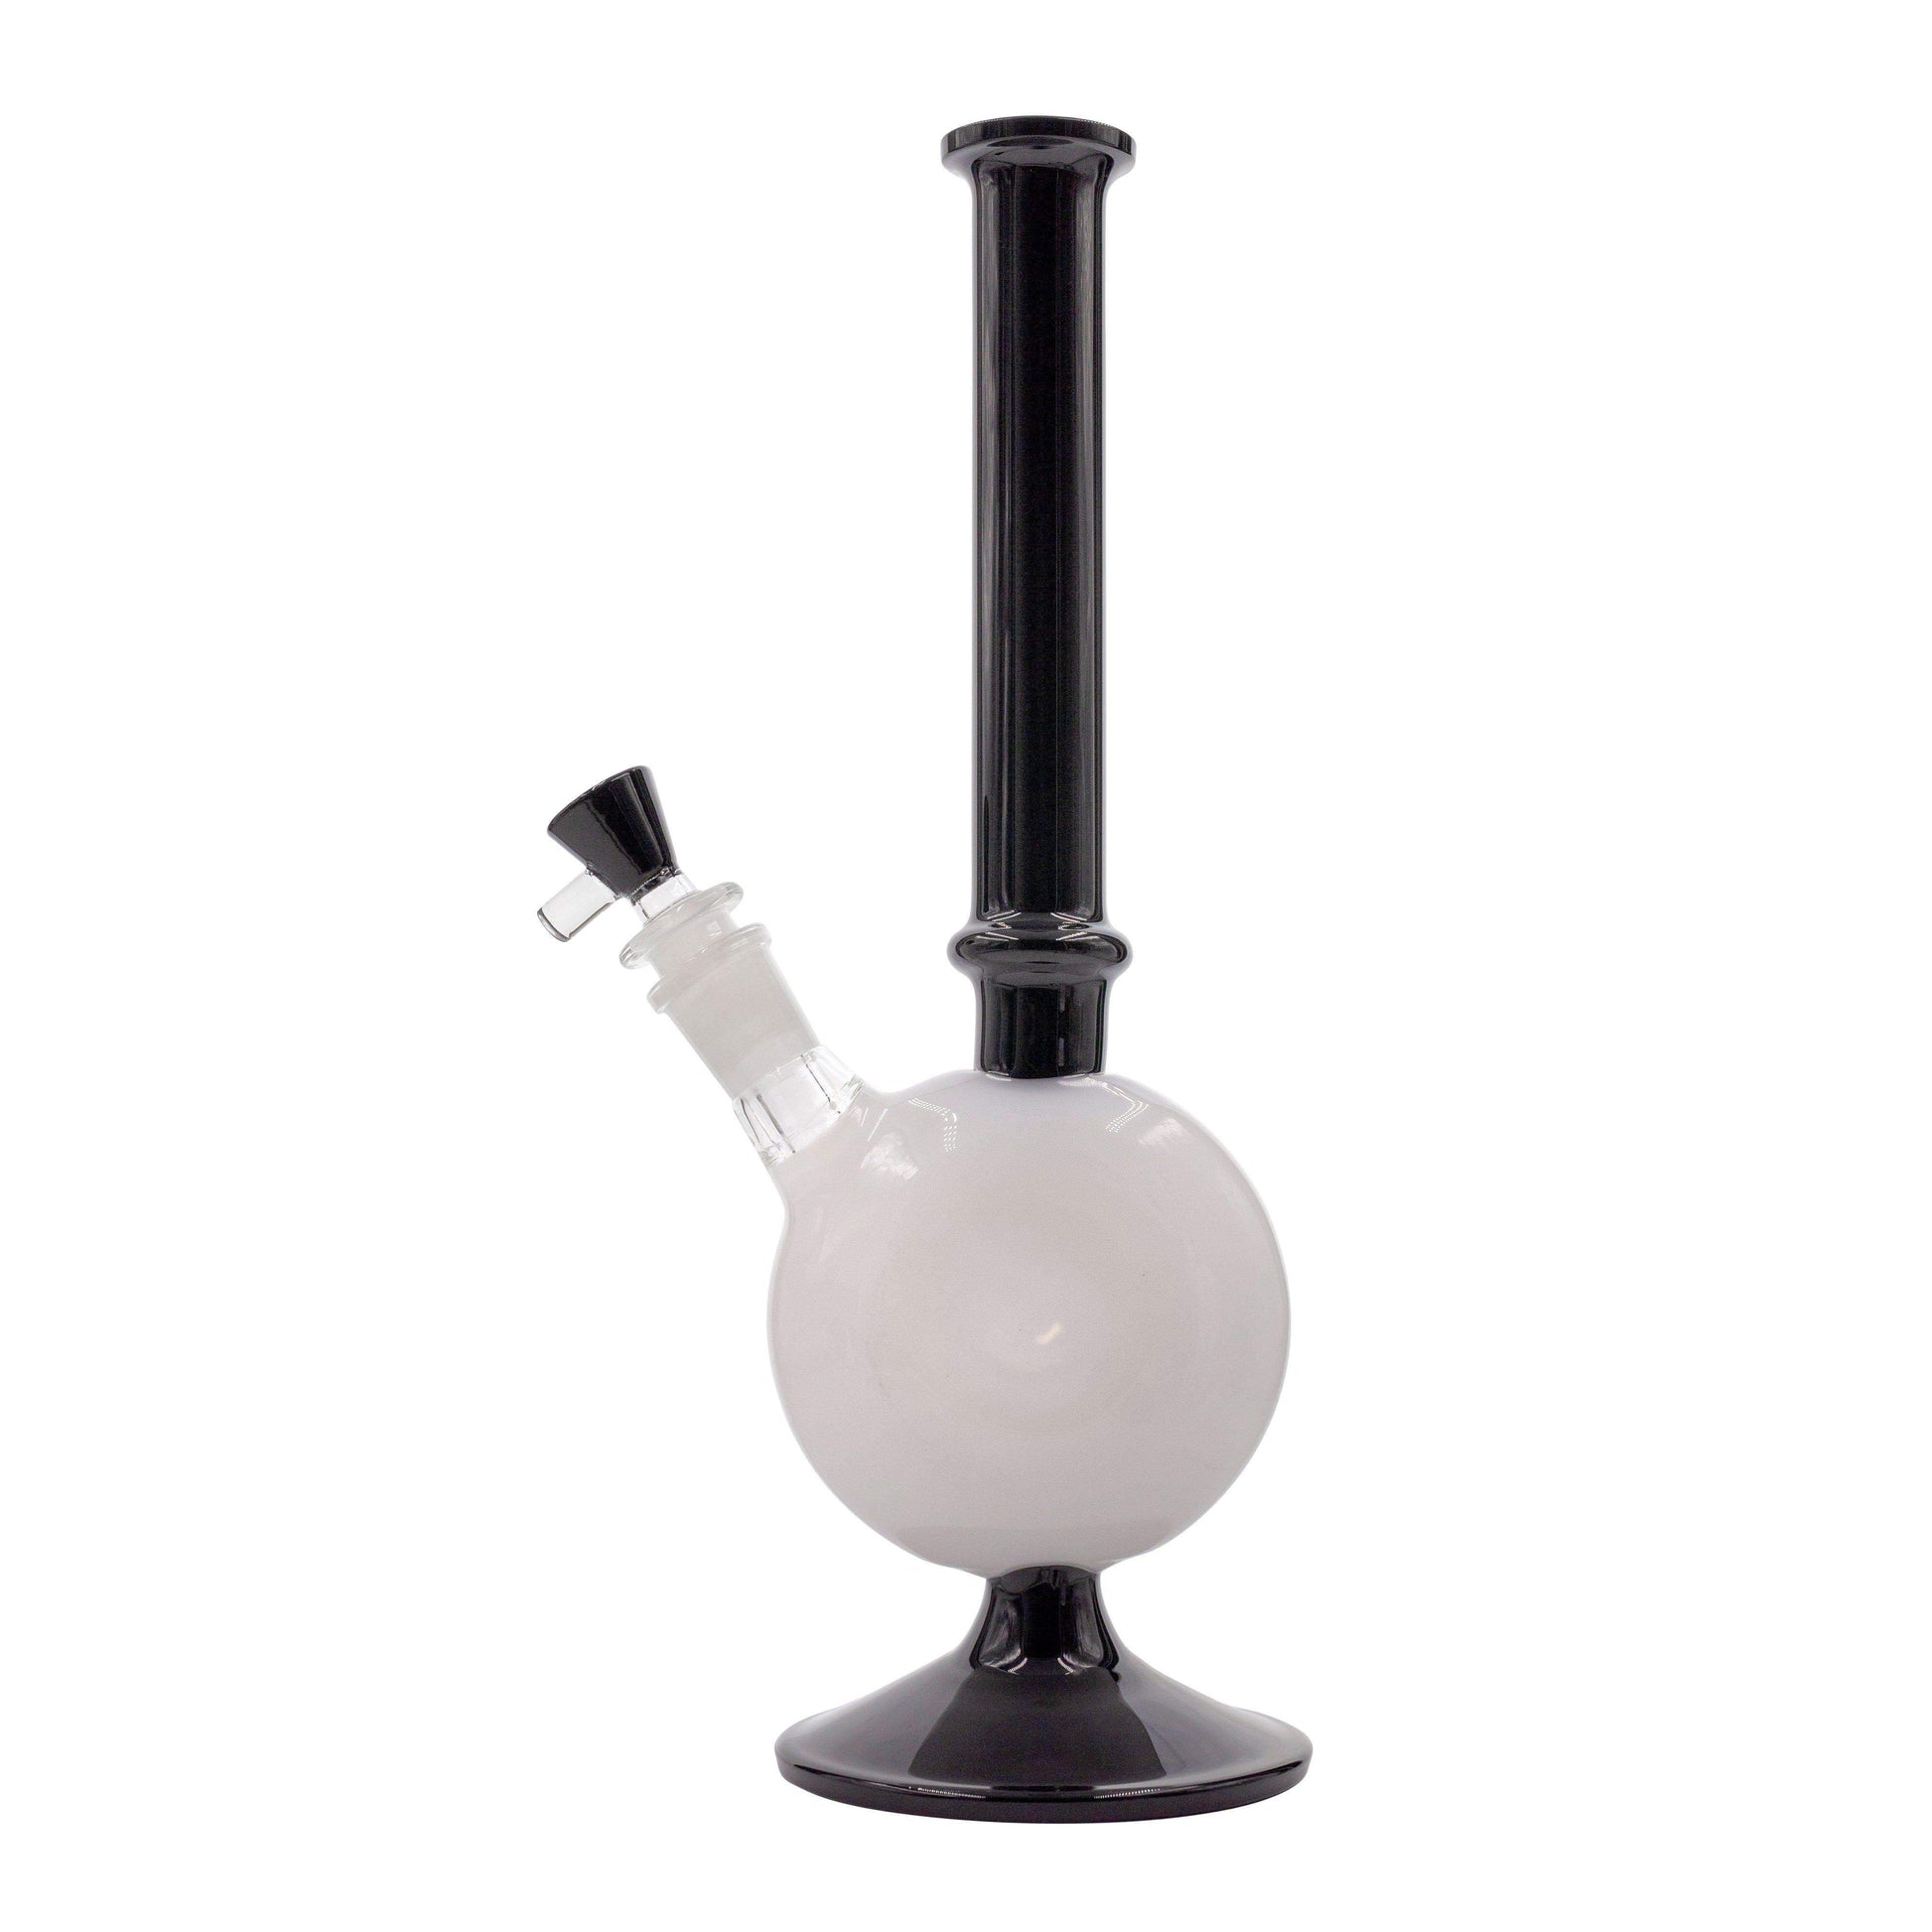 Classy 12-inch glass bong smoking device with splashguard eyeball-shaped chamber unique design